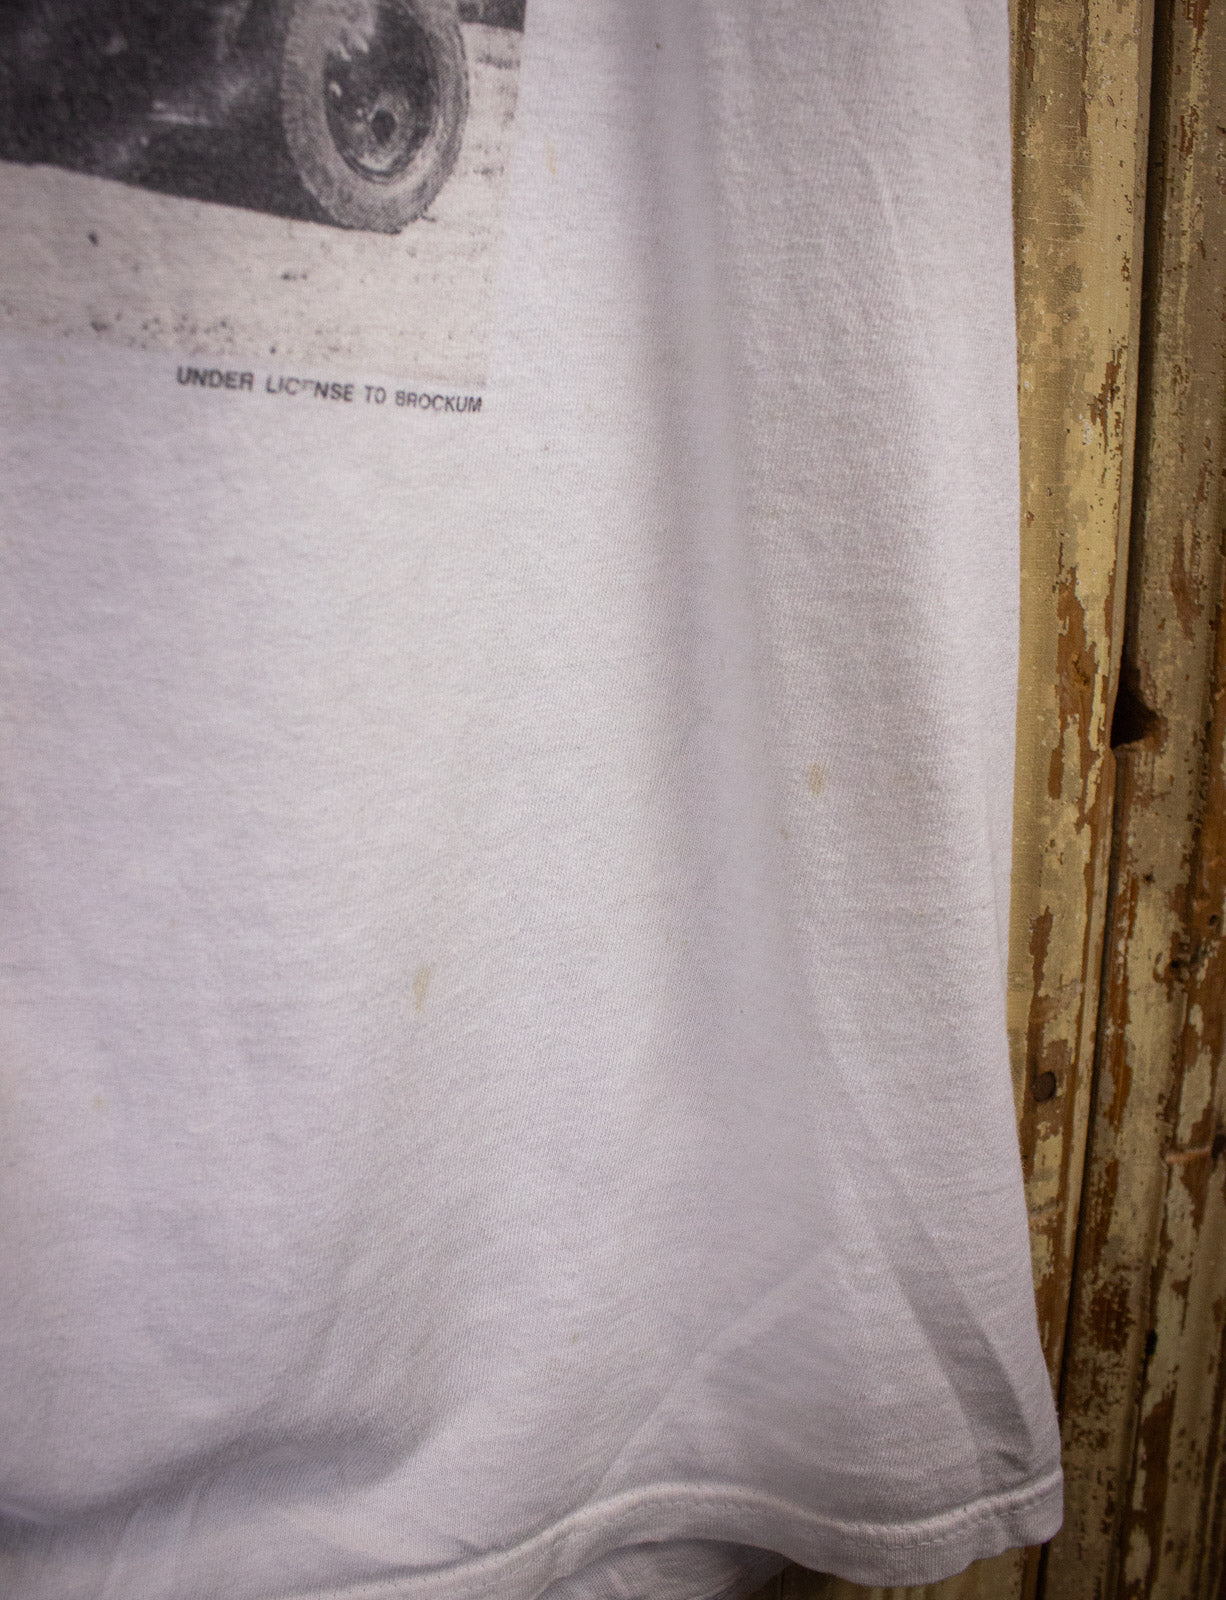 Vintage Aerosmith Pump Concert T Shirt 1989 White Large